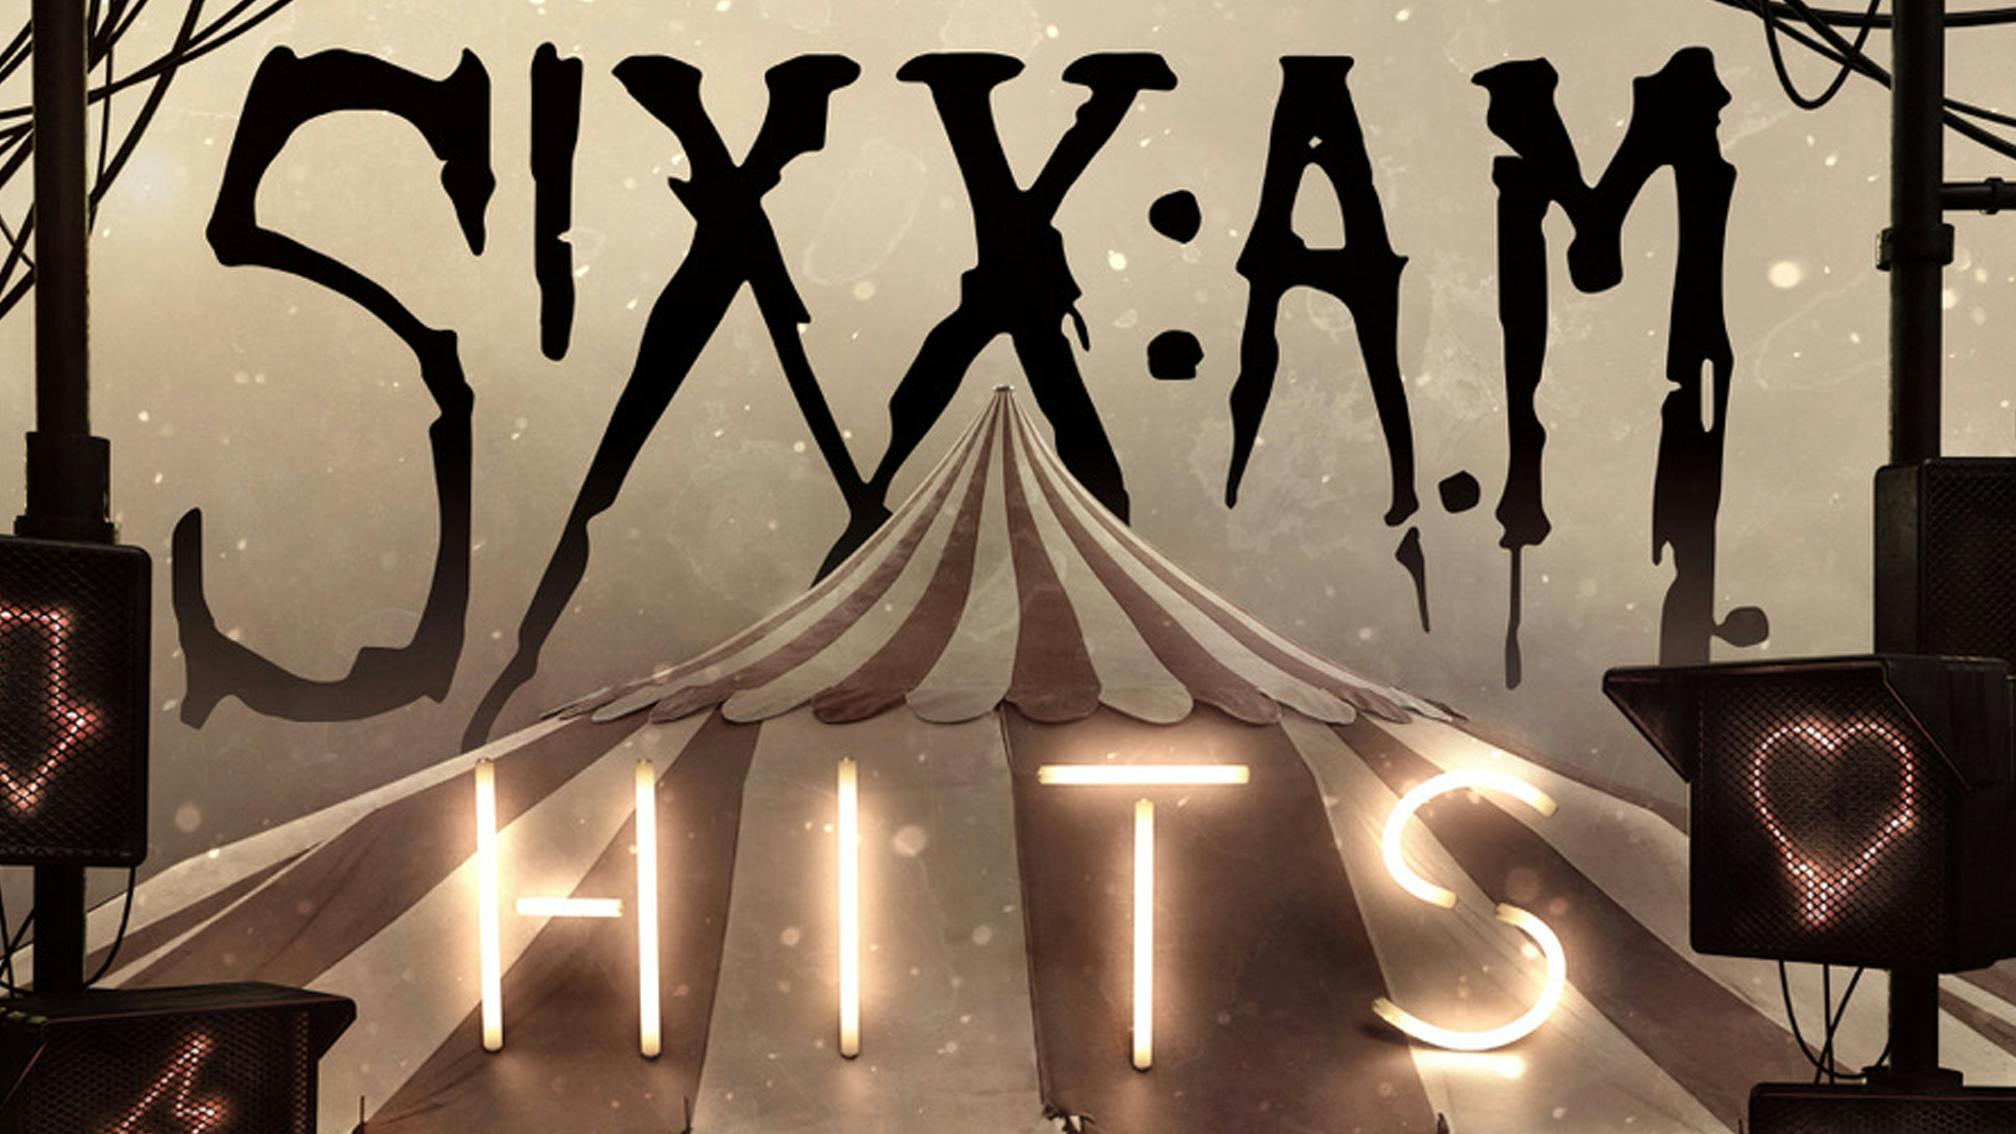 SIXX:A.M. announce new album Hits to celebrate Nikki Sixx’s upcoming memoir